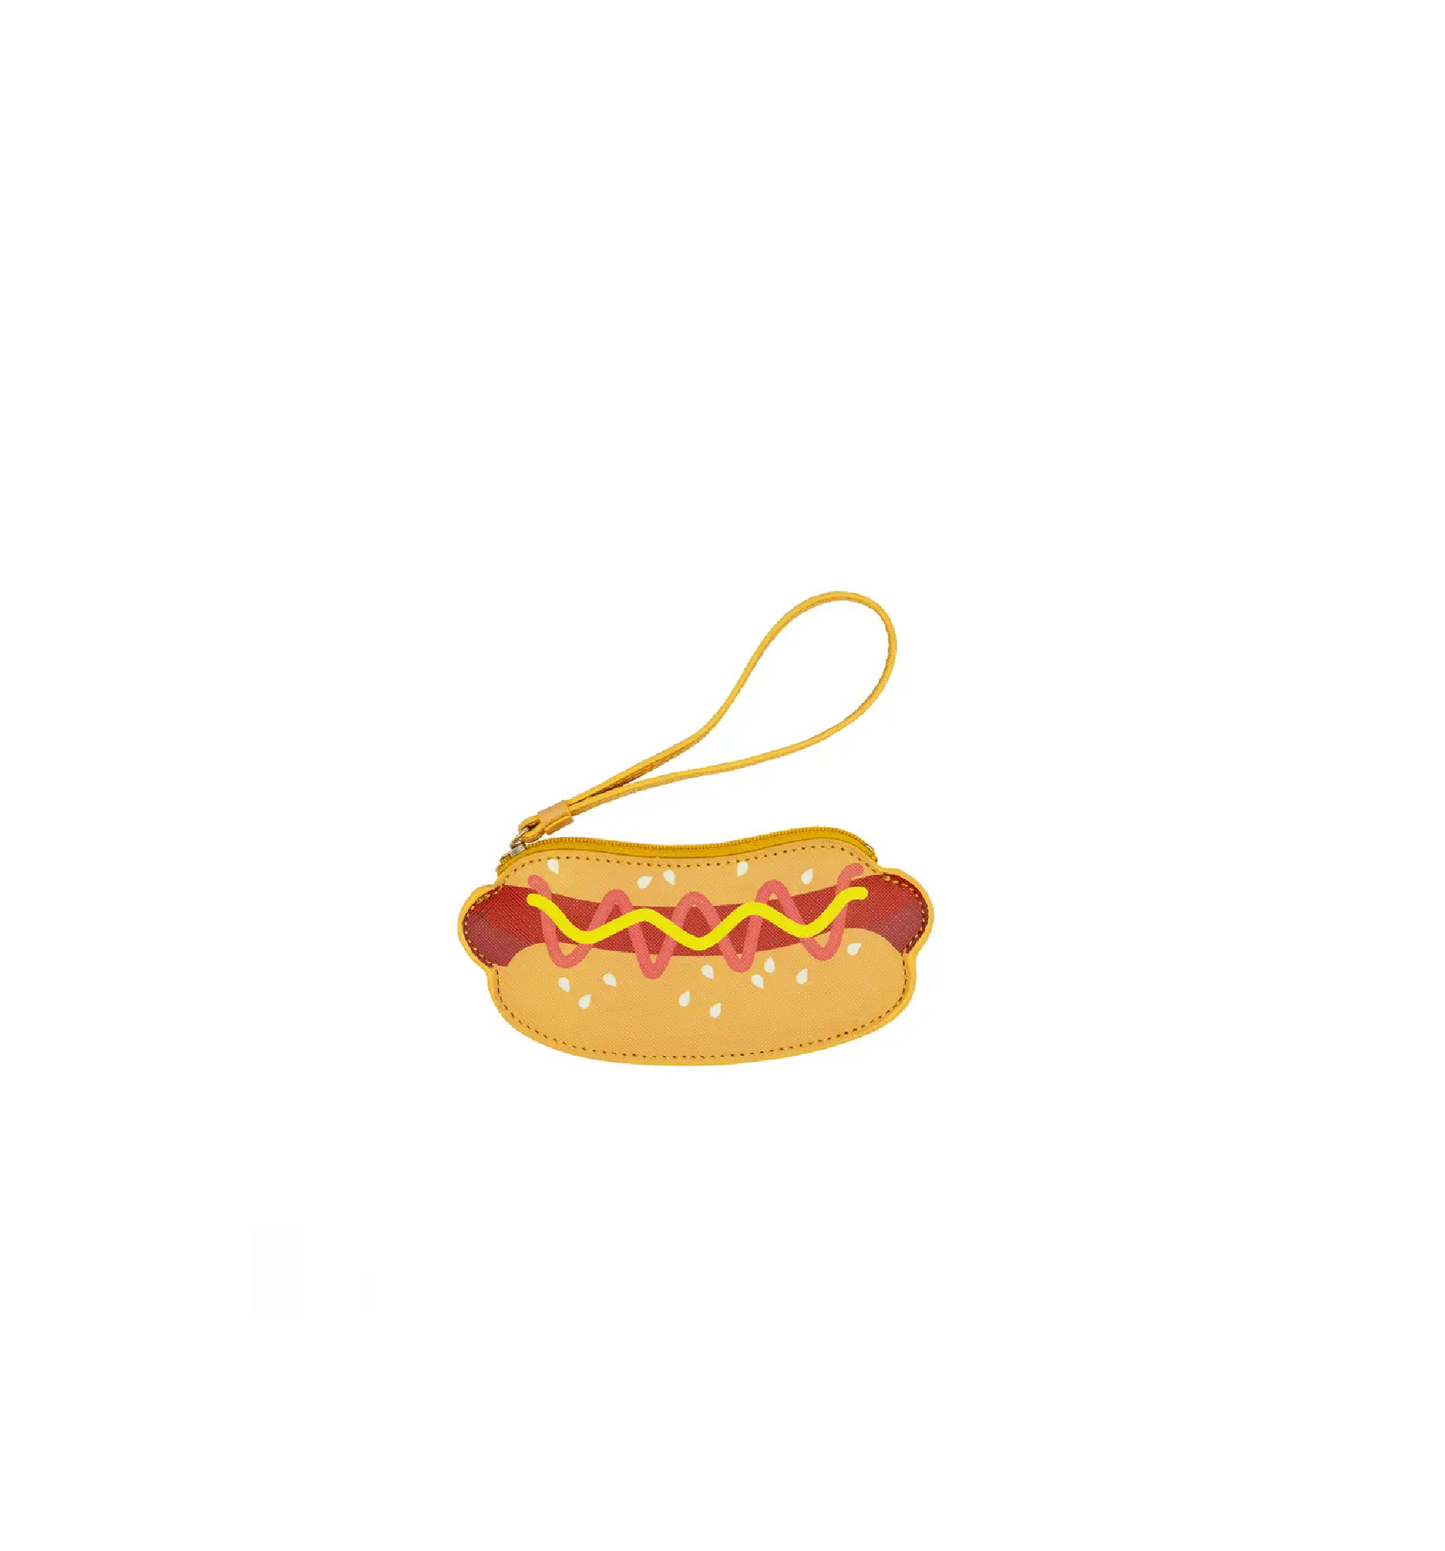 Novelty Wristlet - Hot Dog